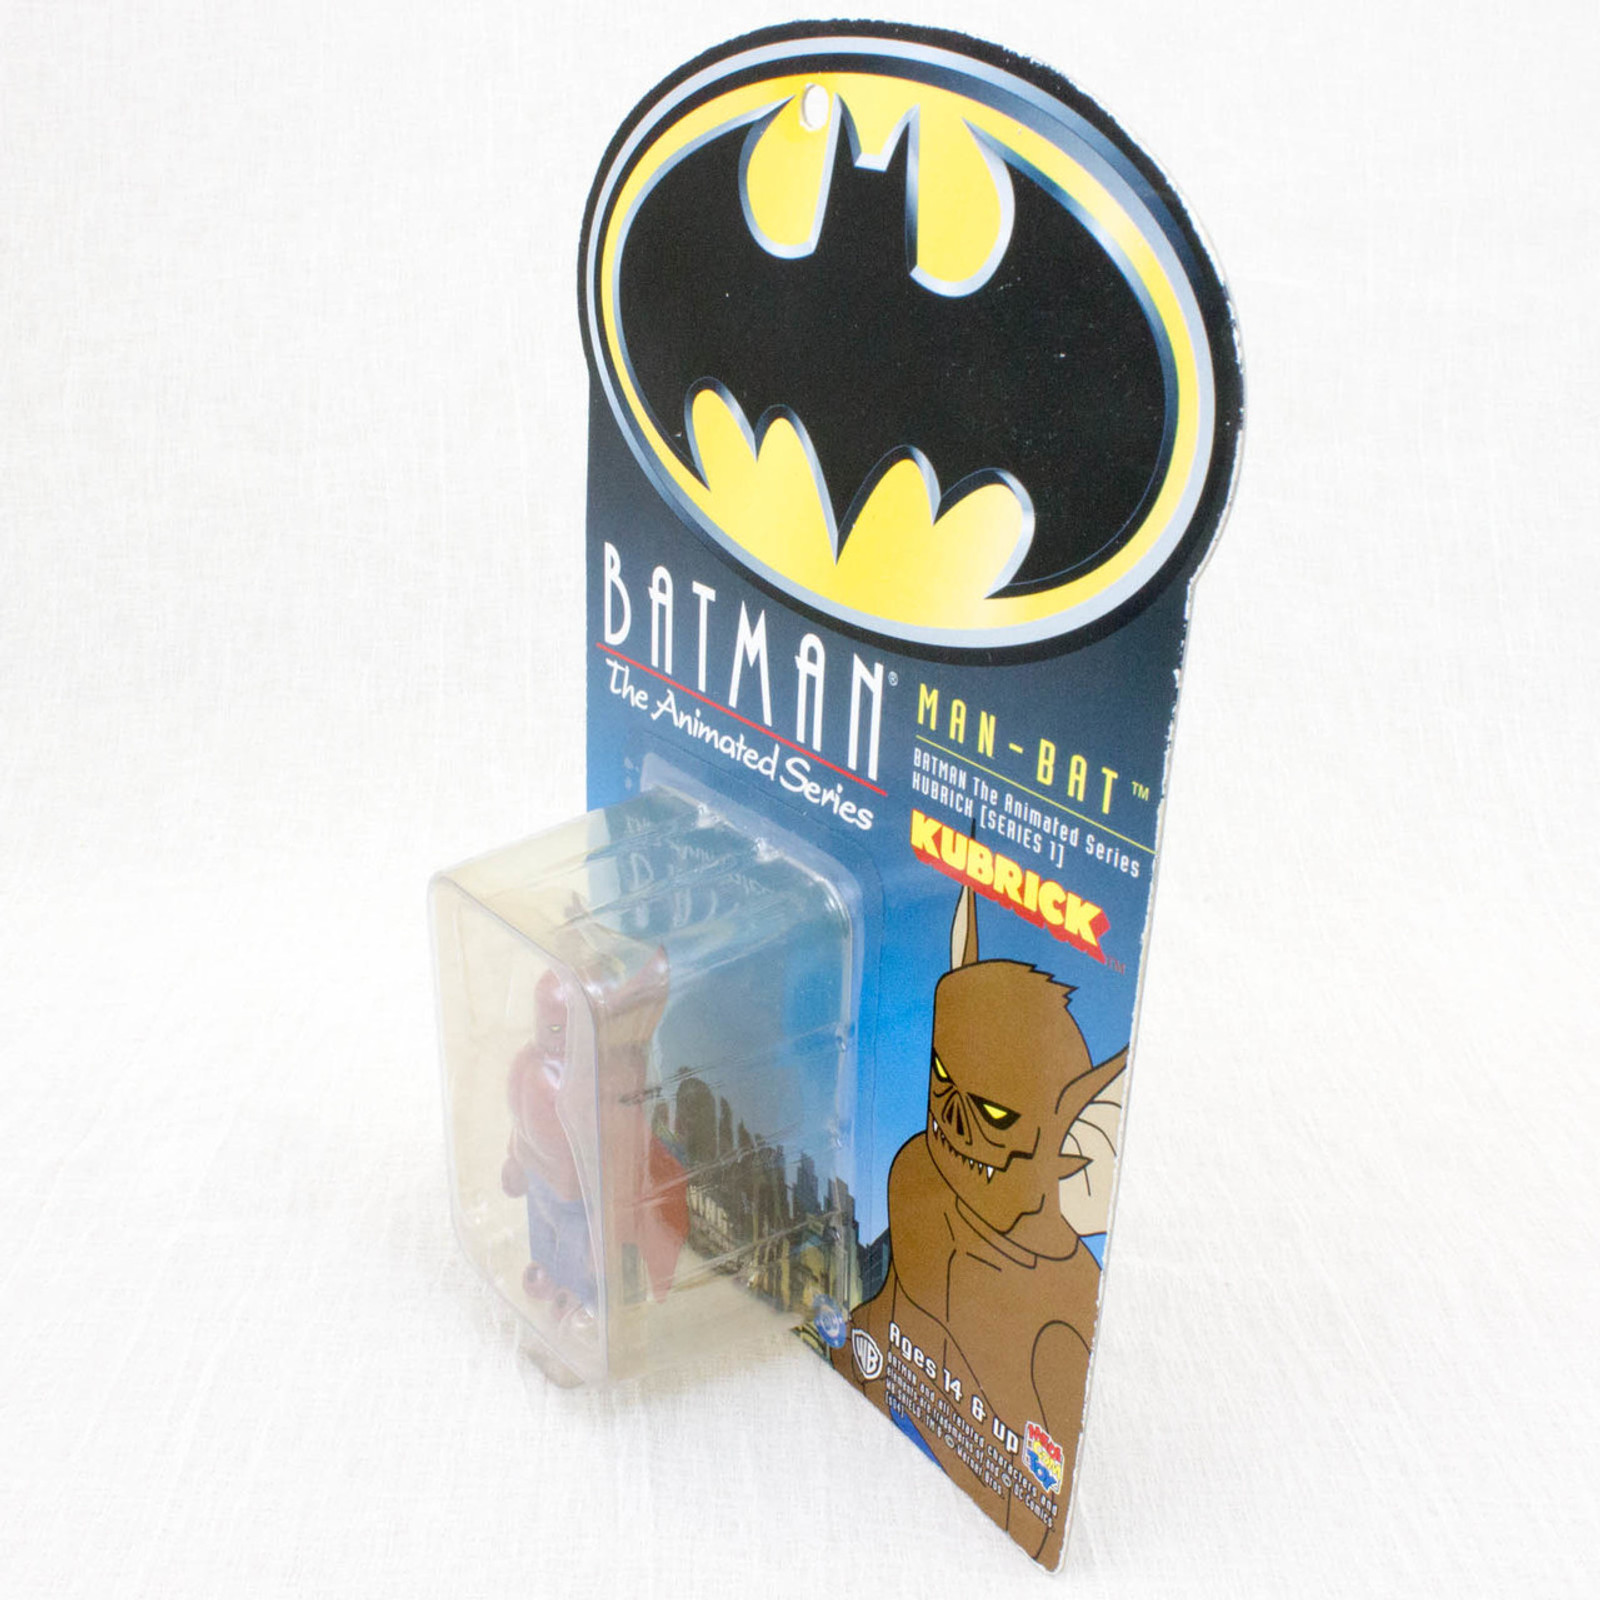 Batman Animated Man-Bat Kubrick Medicom Toy Figure JAPAN